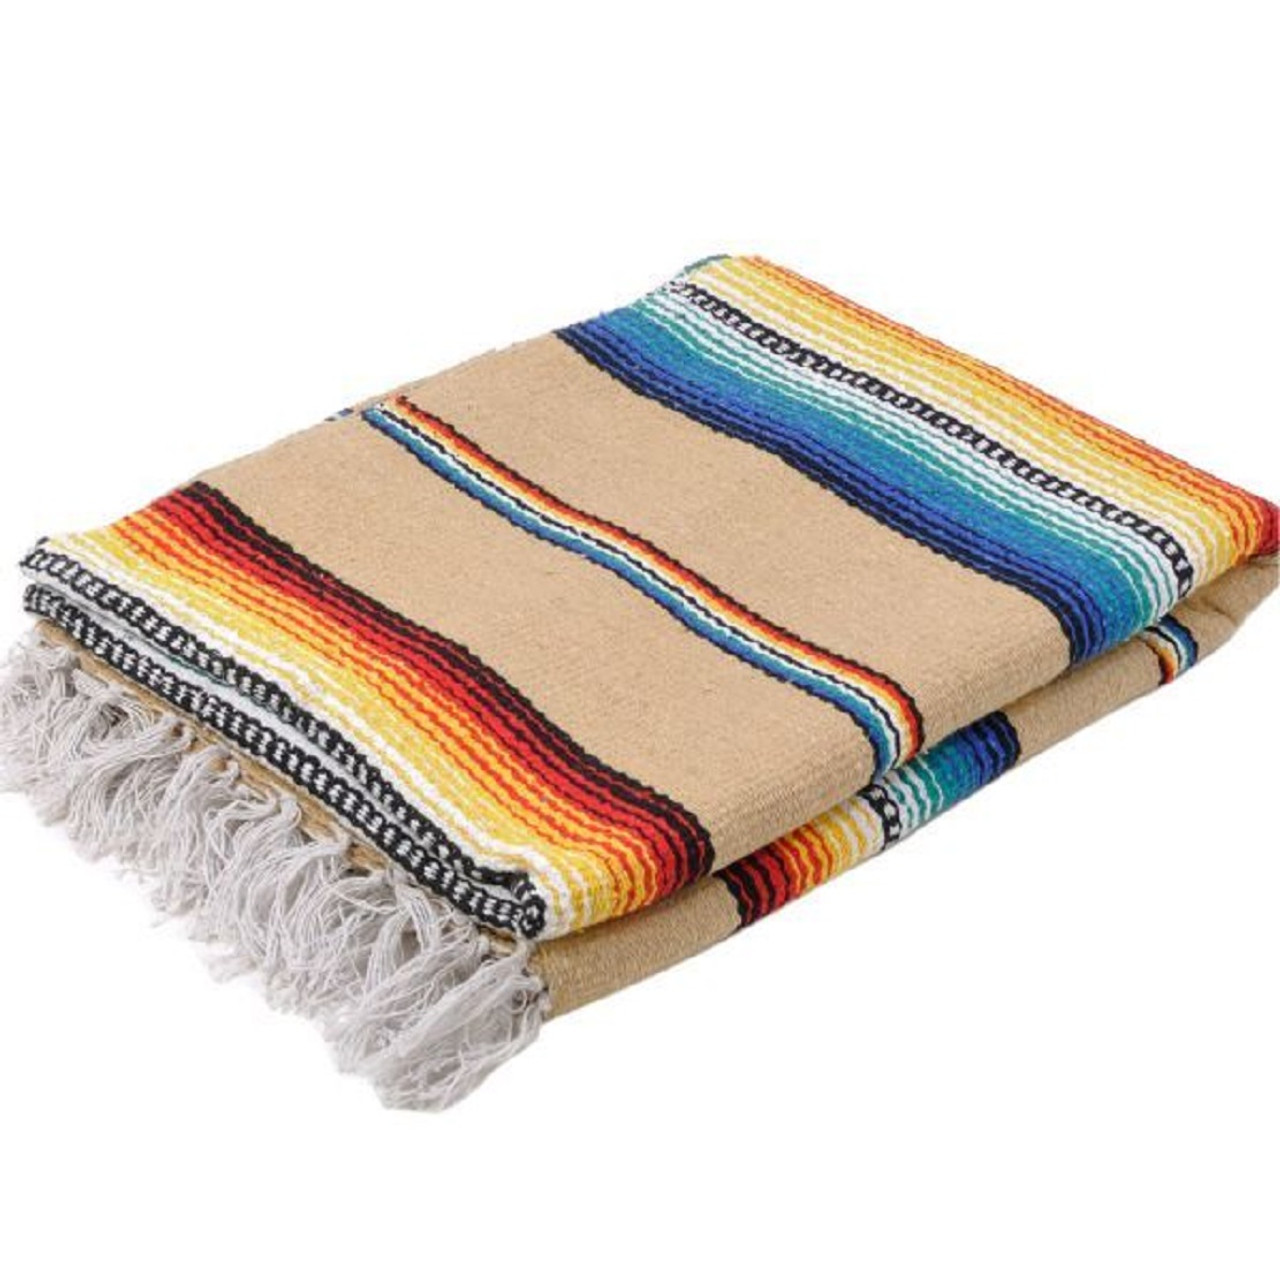 Sarape Cotton Heavy Weave 58 x 78 Striped Tan Yoga Roll Blanket